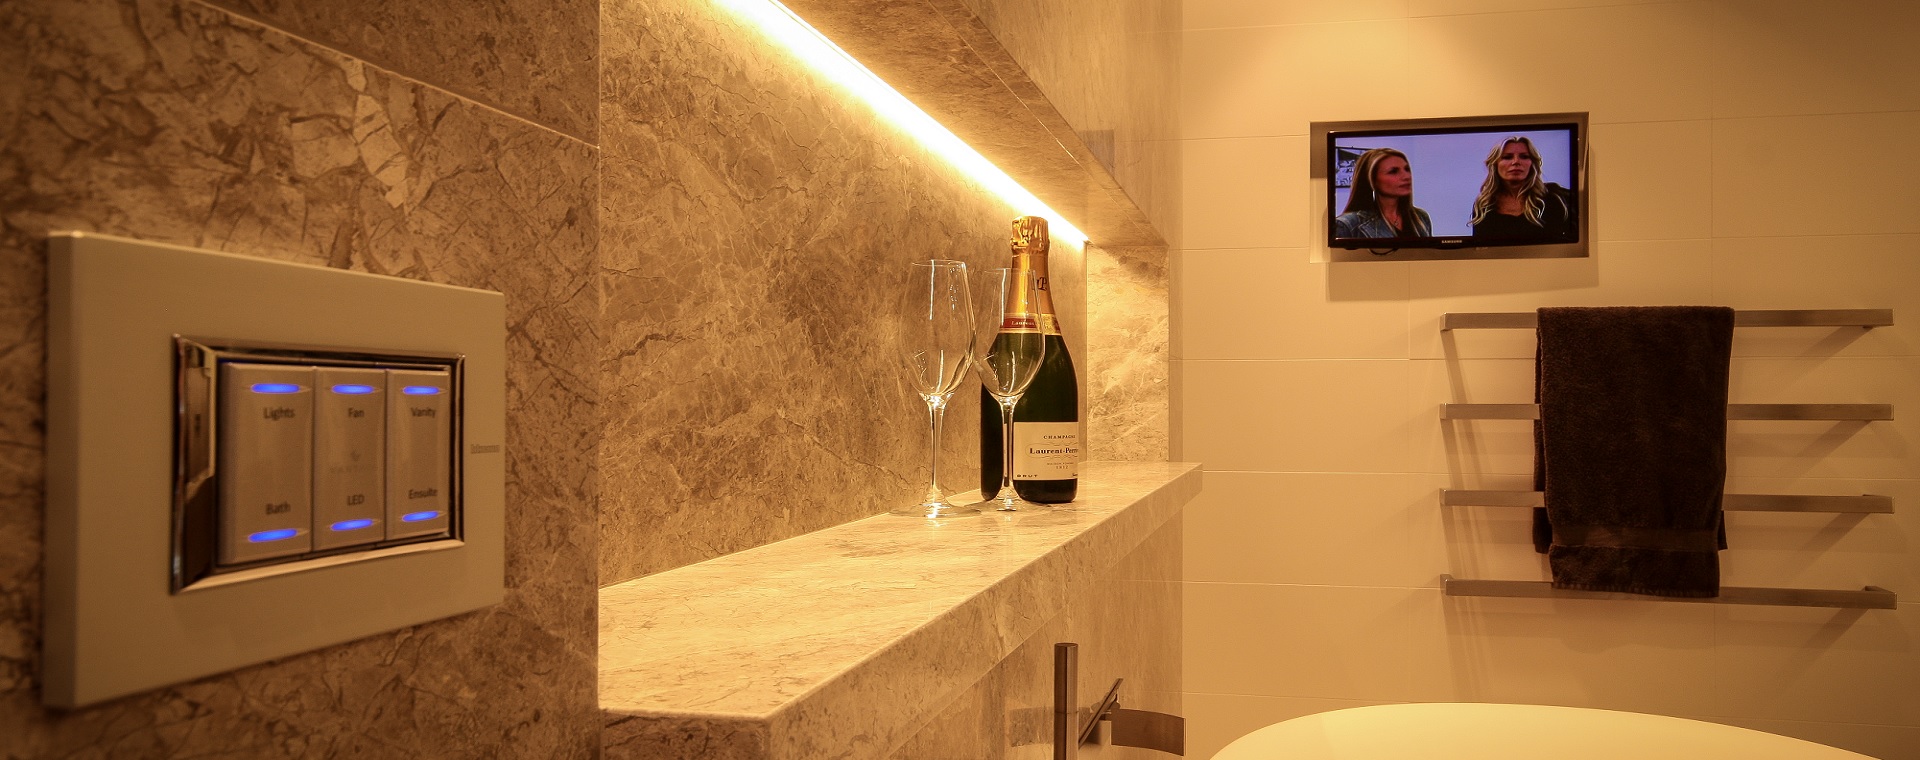 Beautiful bathroom with sleek keypad for control of lighting, TV and audio.